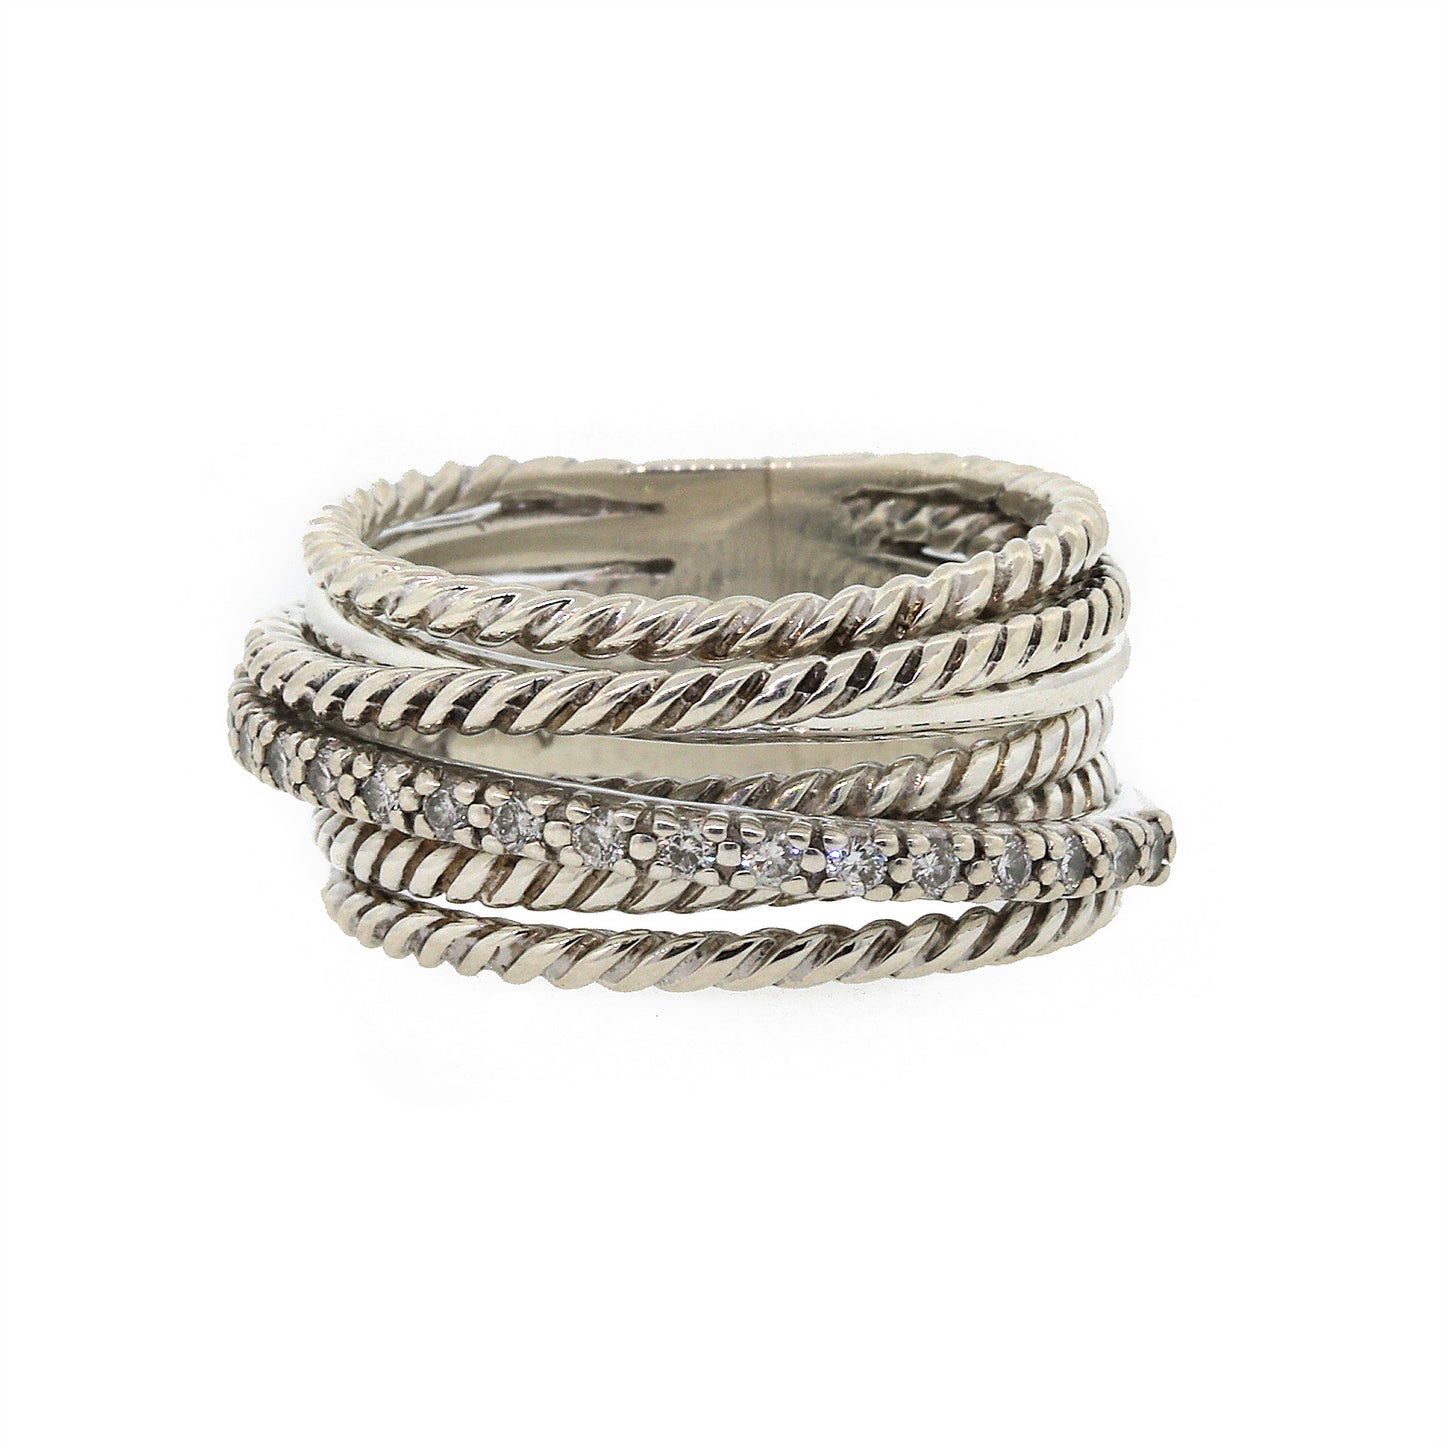 Crossover Link Bracelet in Sterling Silver with Diamonds, 3mm | David Yurman